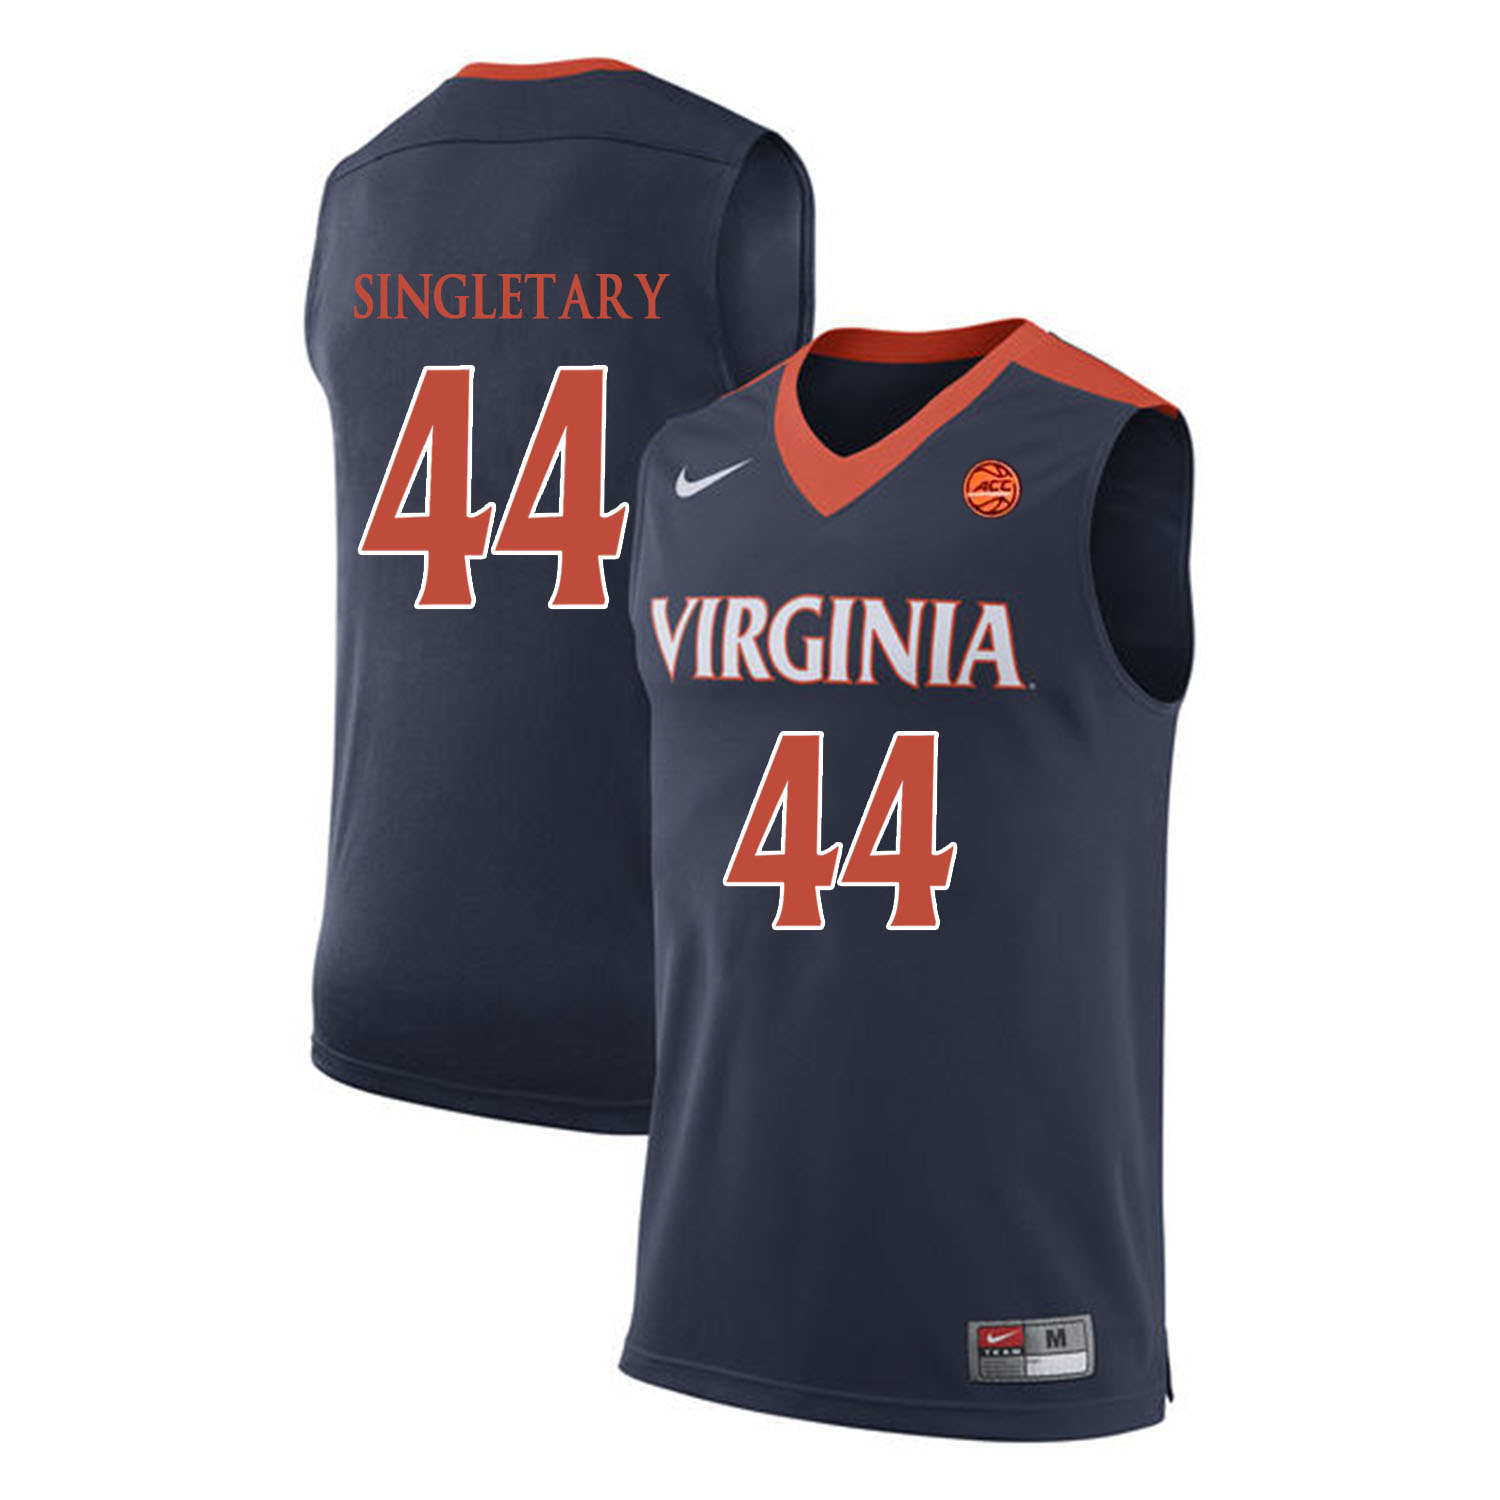 Virginia Cavaliers 44 Sean Singletary Navy College Basketball Jersey